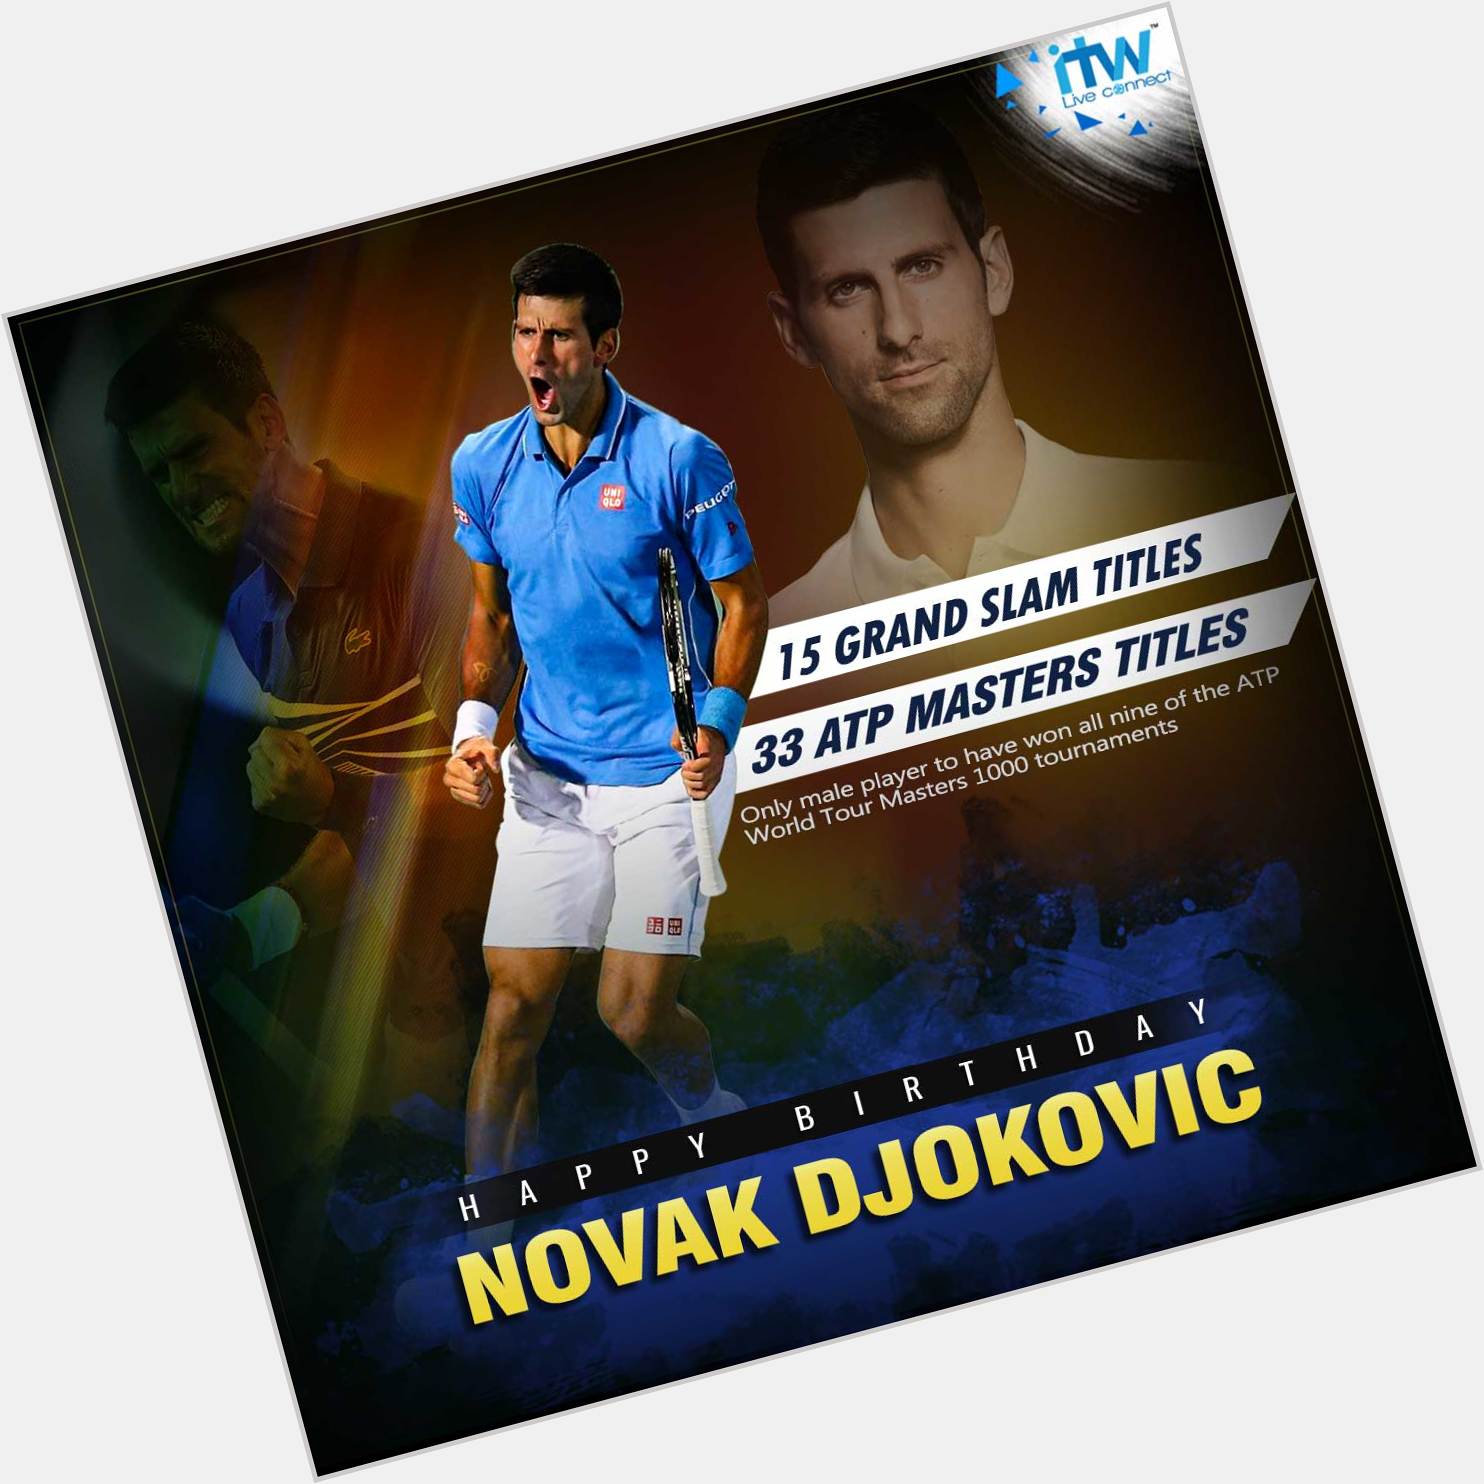 Happy Birthday to World\s tennis player Novak Djokovi Nole!   